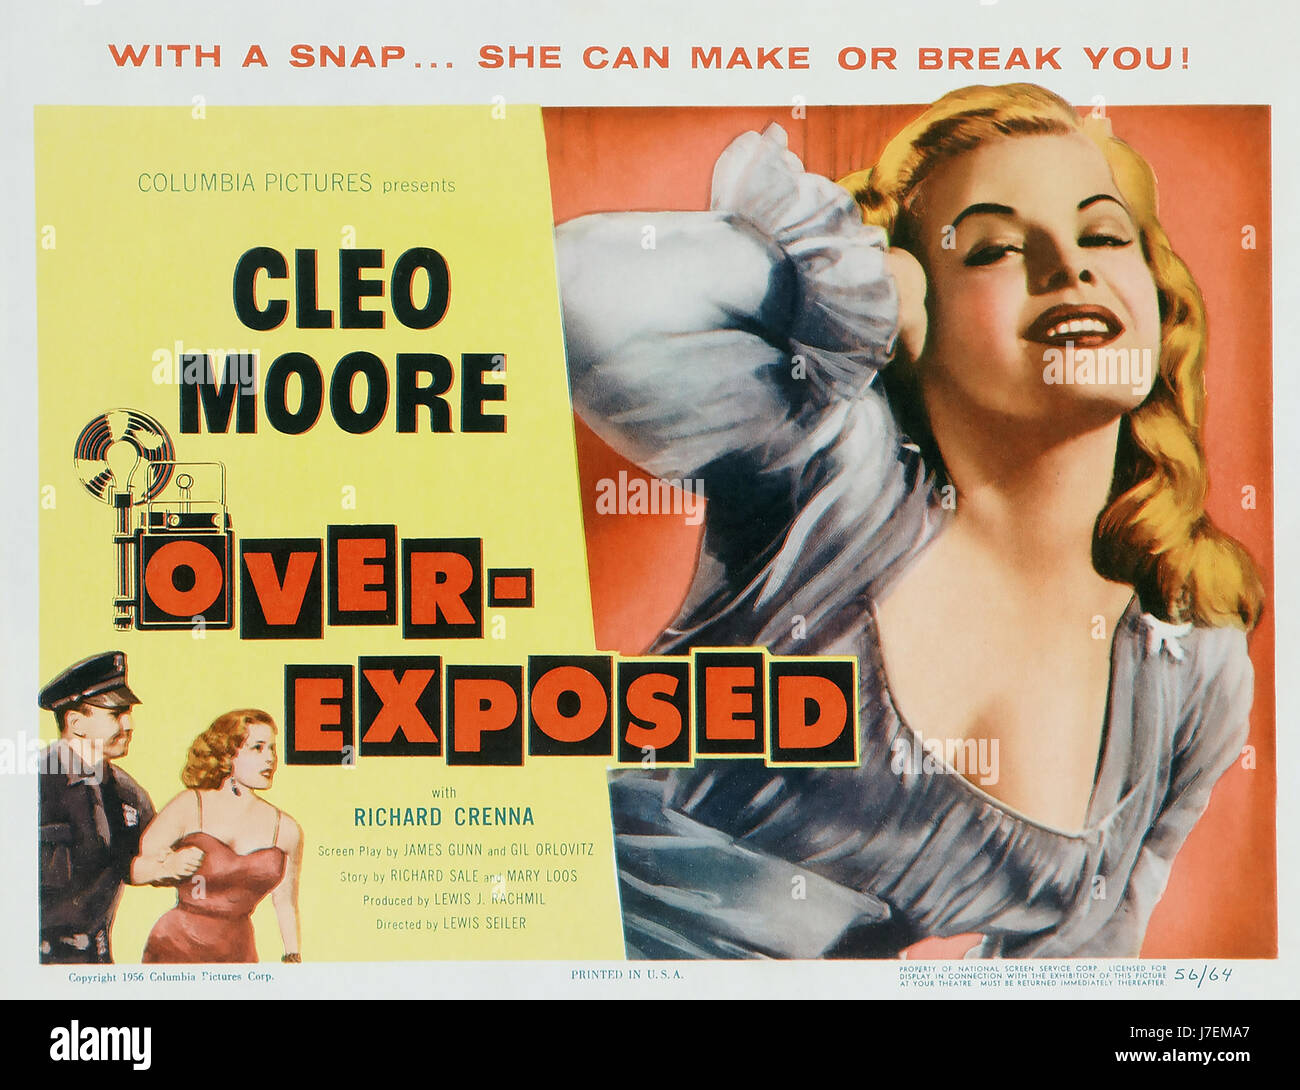 OVER EXPOSED 1956 Columbia film con Cleo Moore como Lily Foto de stock